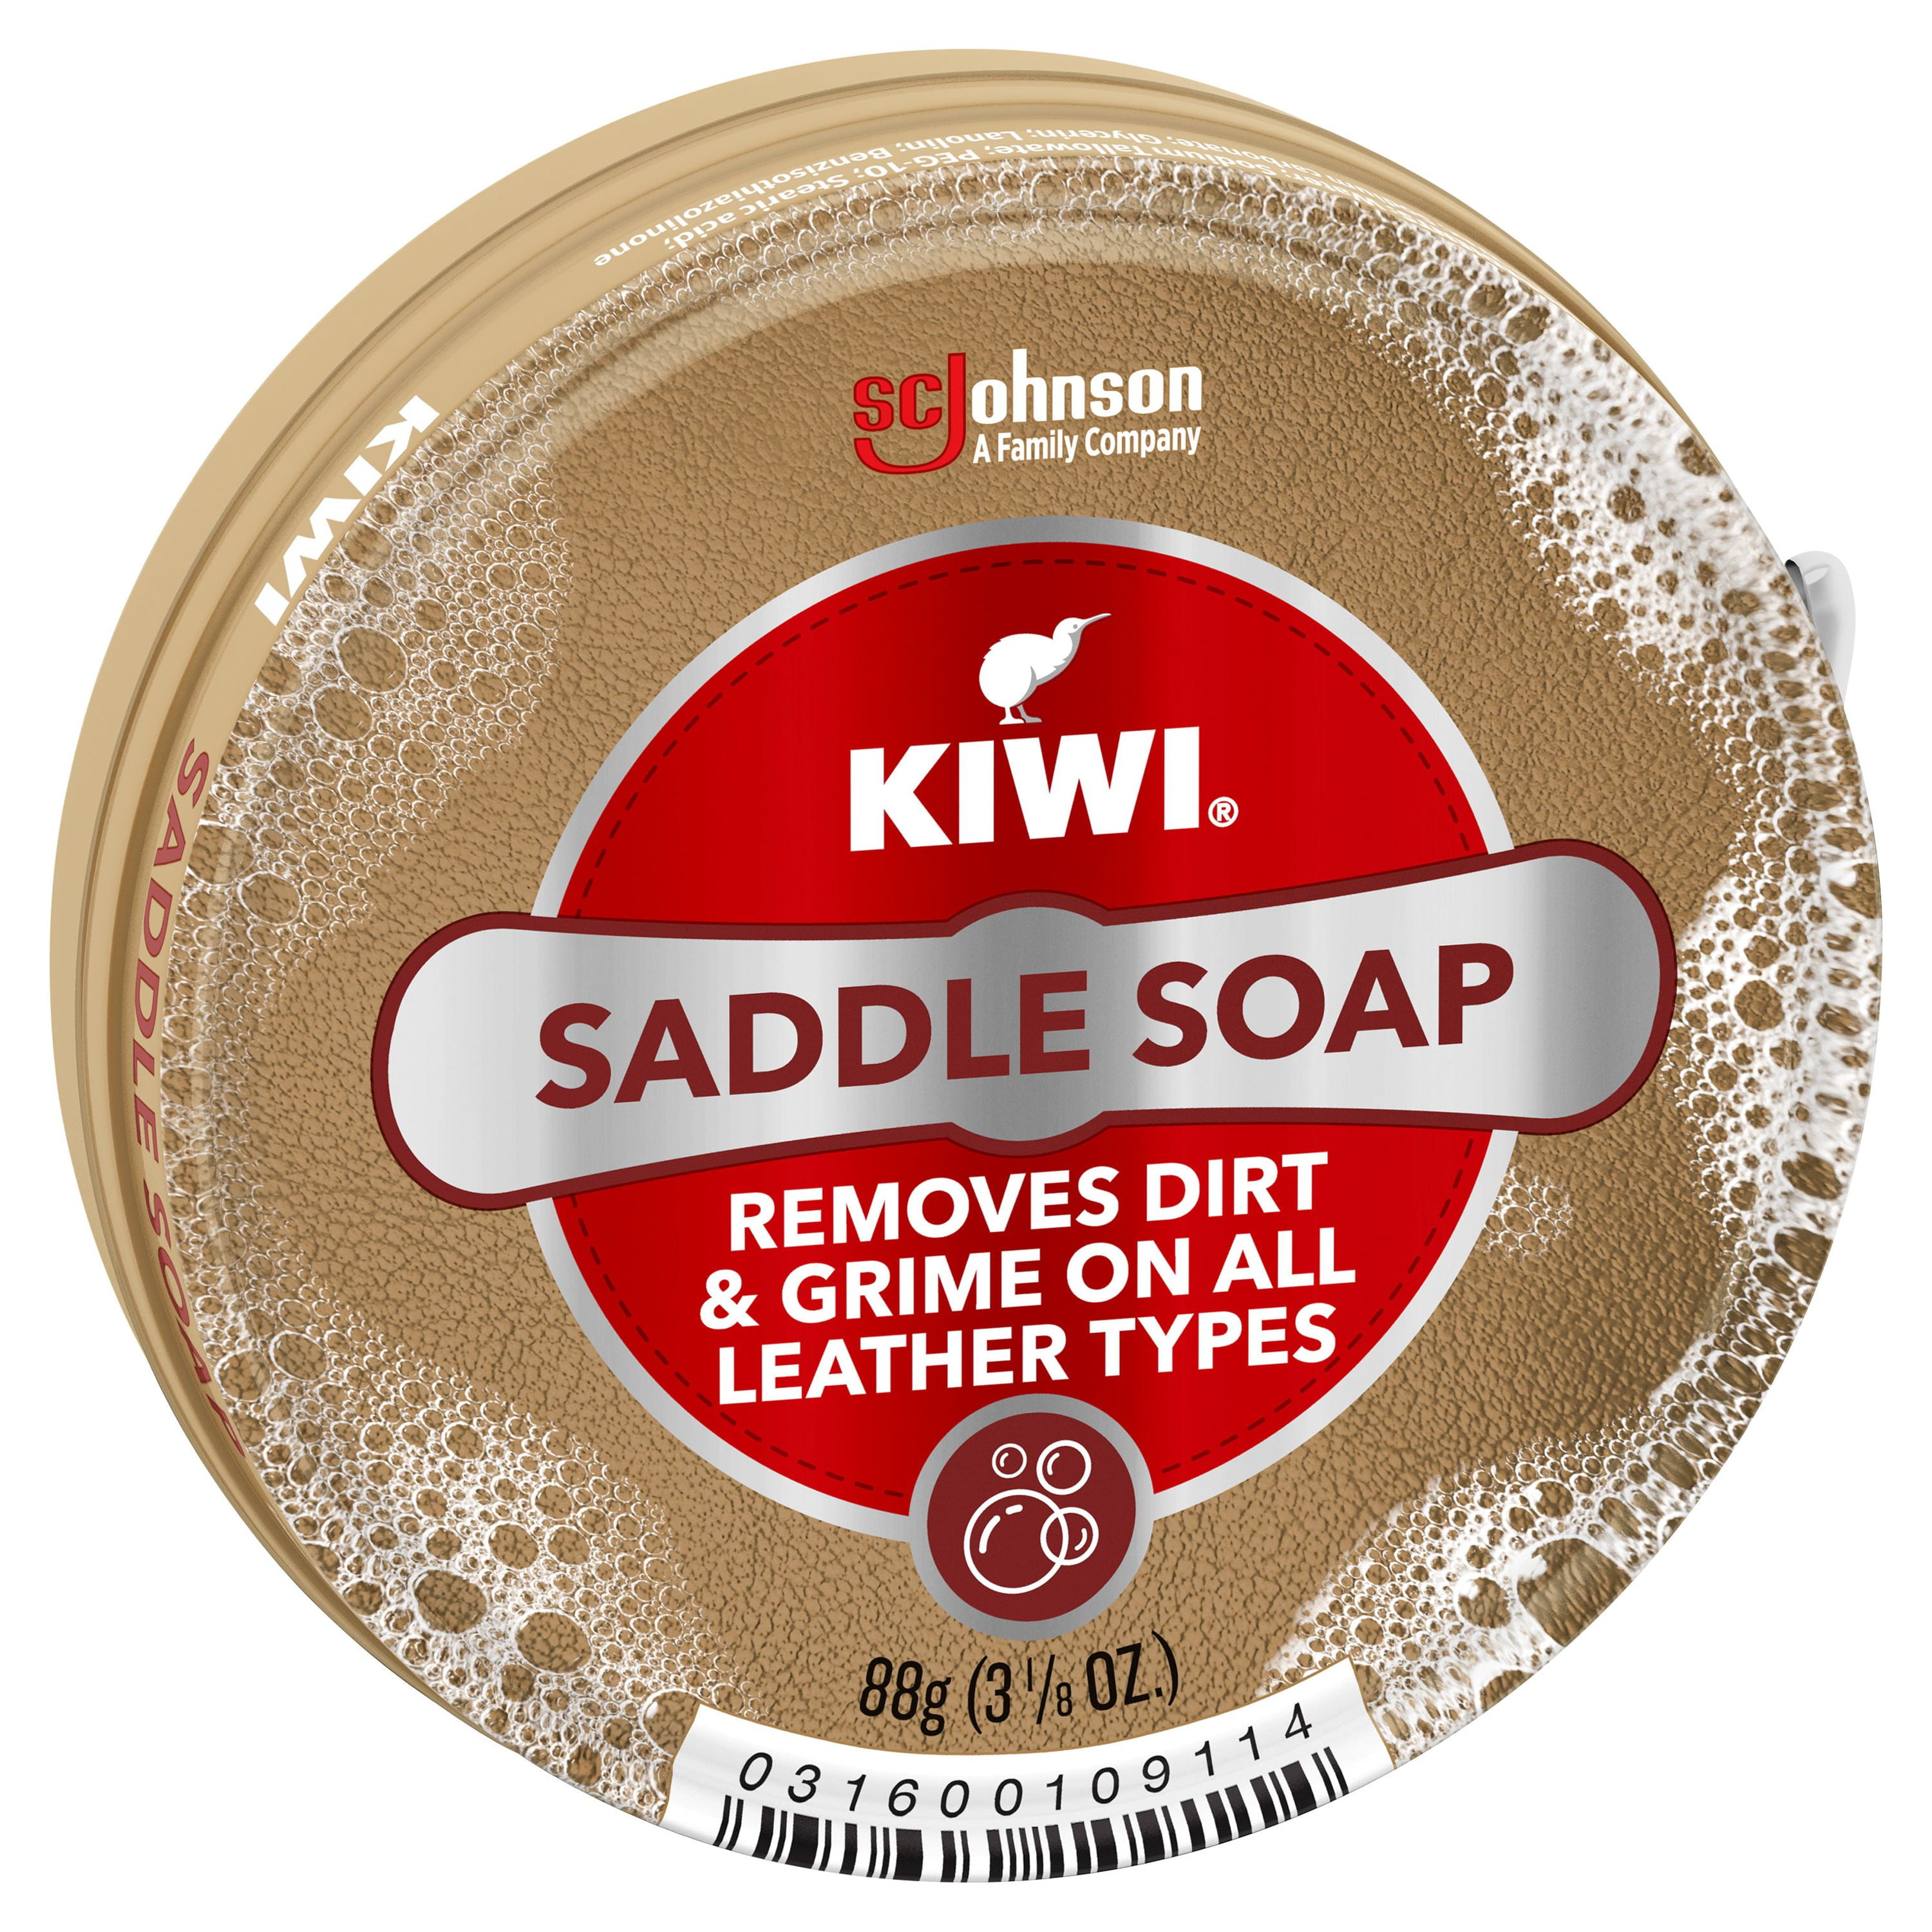 Pair of old saddle soap tins Kiwi & Propert's